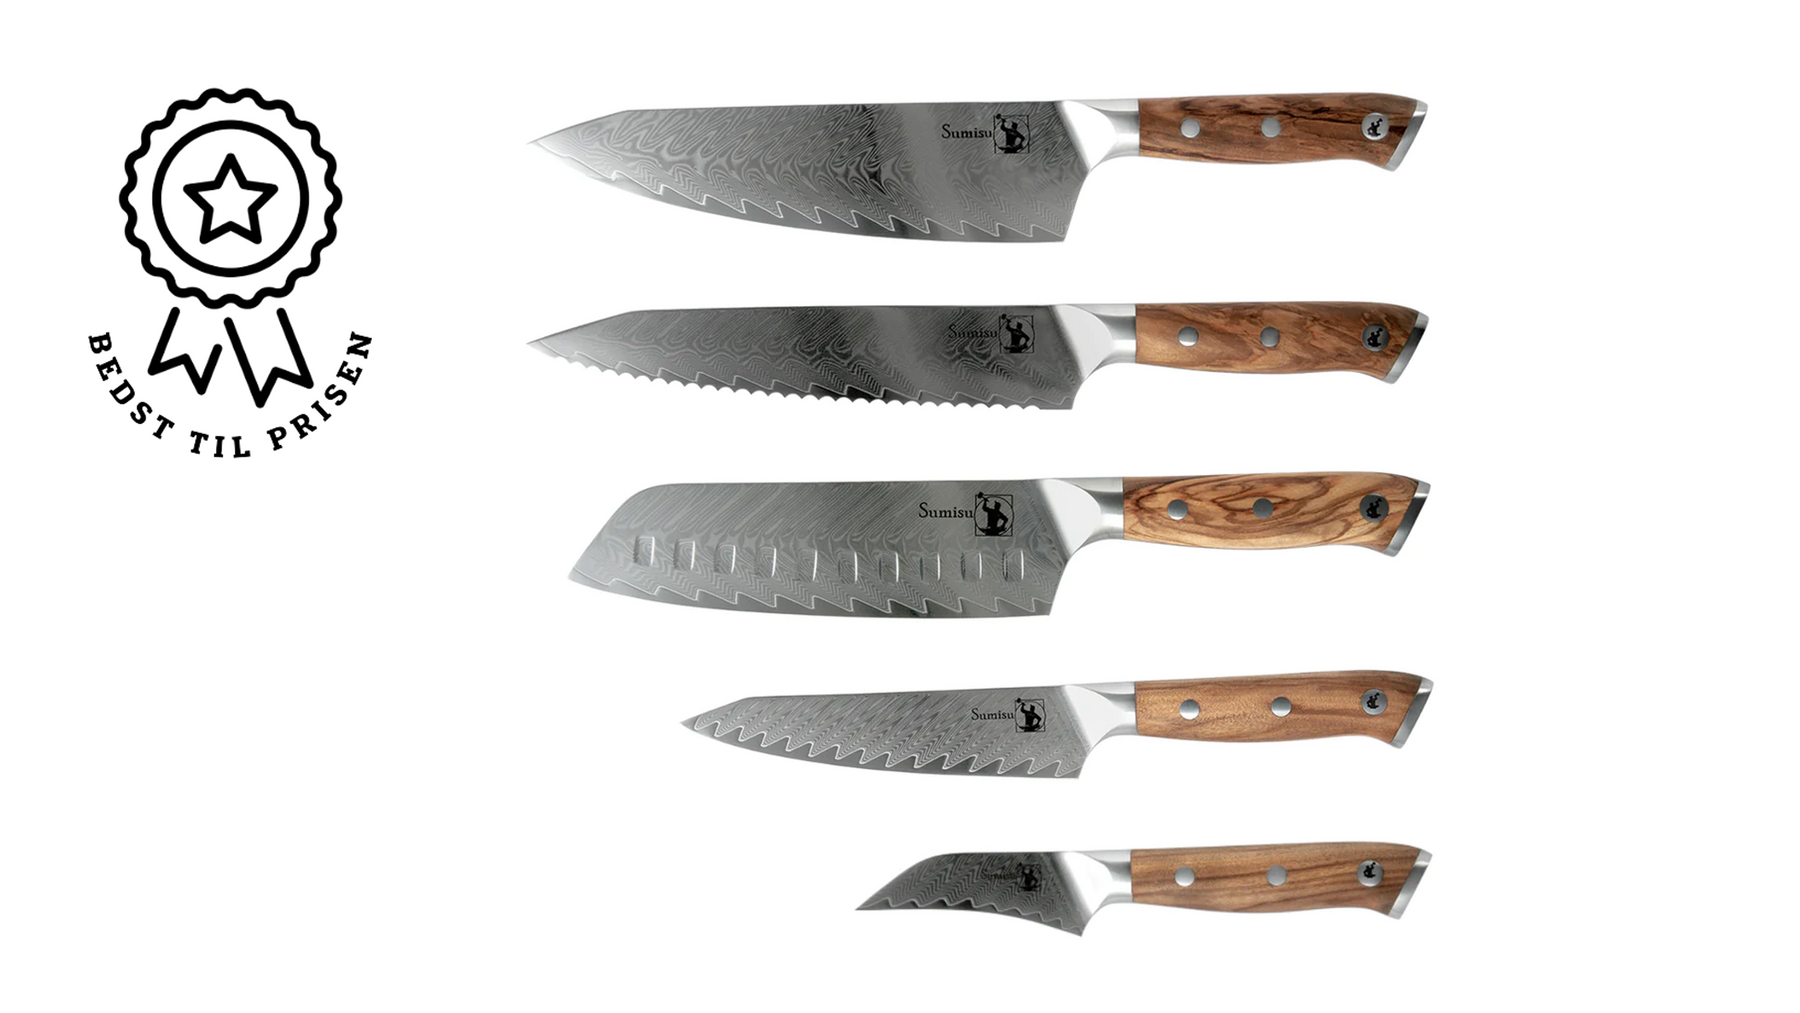 Afgift Litteratur forhandler Art knivsæt med 5 køkkenknive - 67 lags damaskusstål - Sumisu.dk